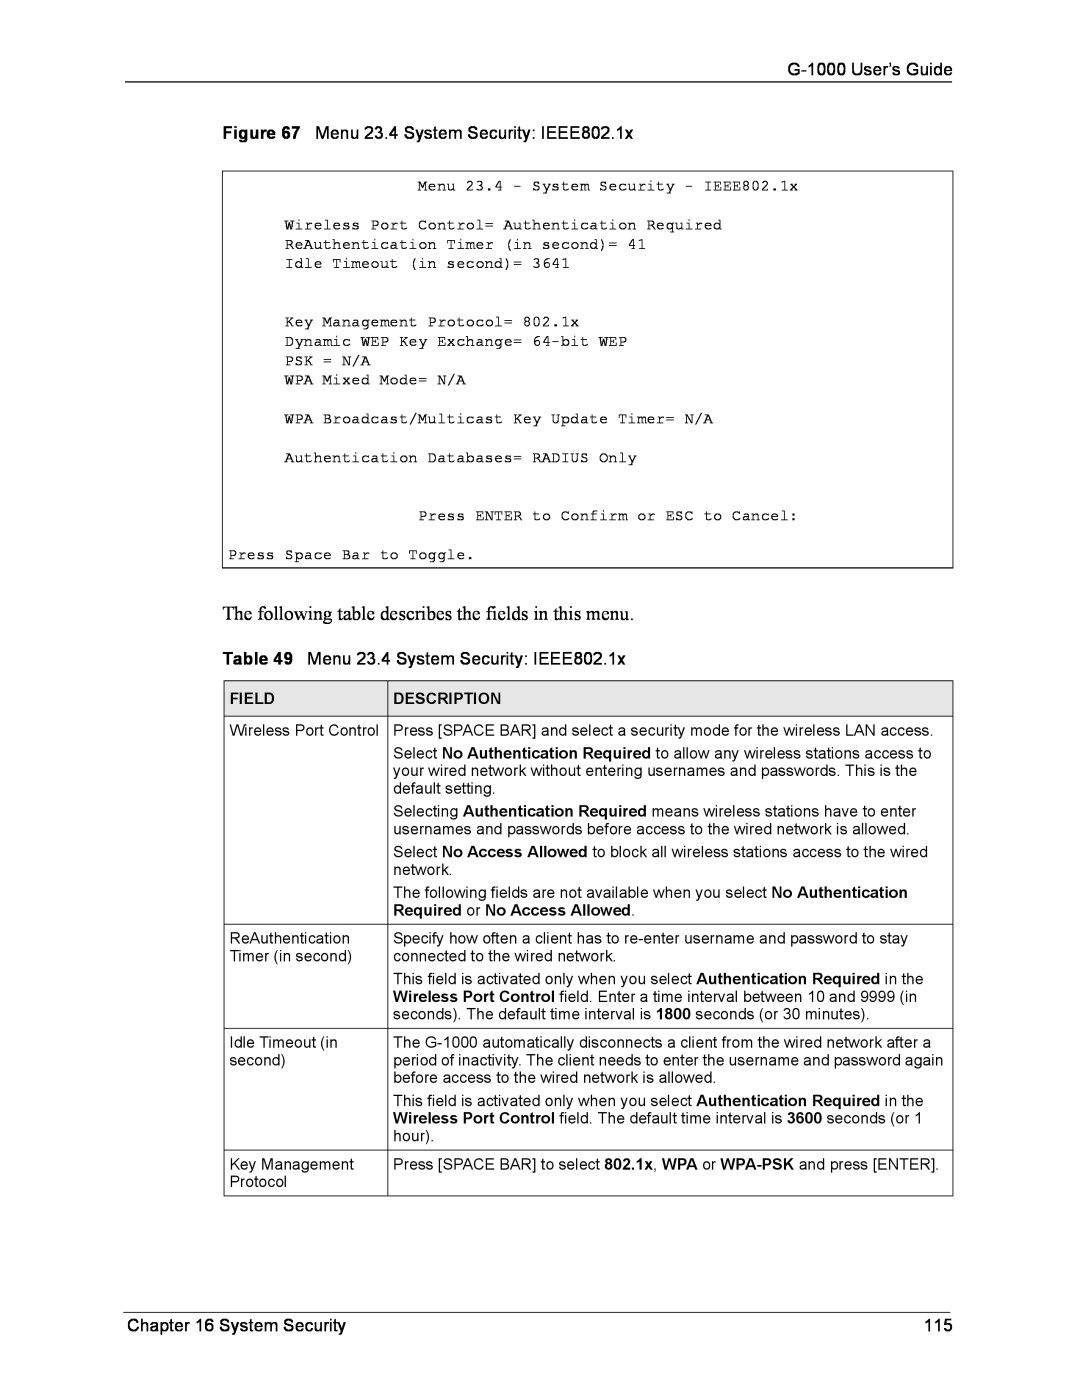 ZyXEL Communications manual G-1000 User’s Guide Menu 23.4 System Security IEEE802.1x, Field, Description 